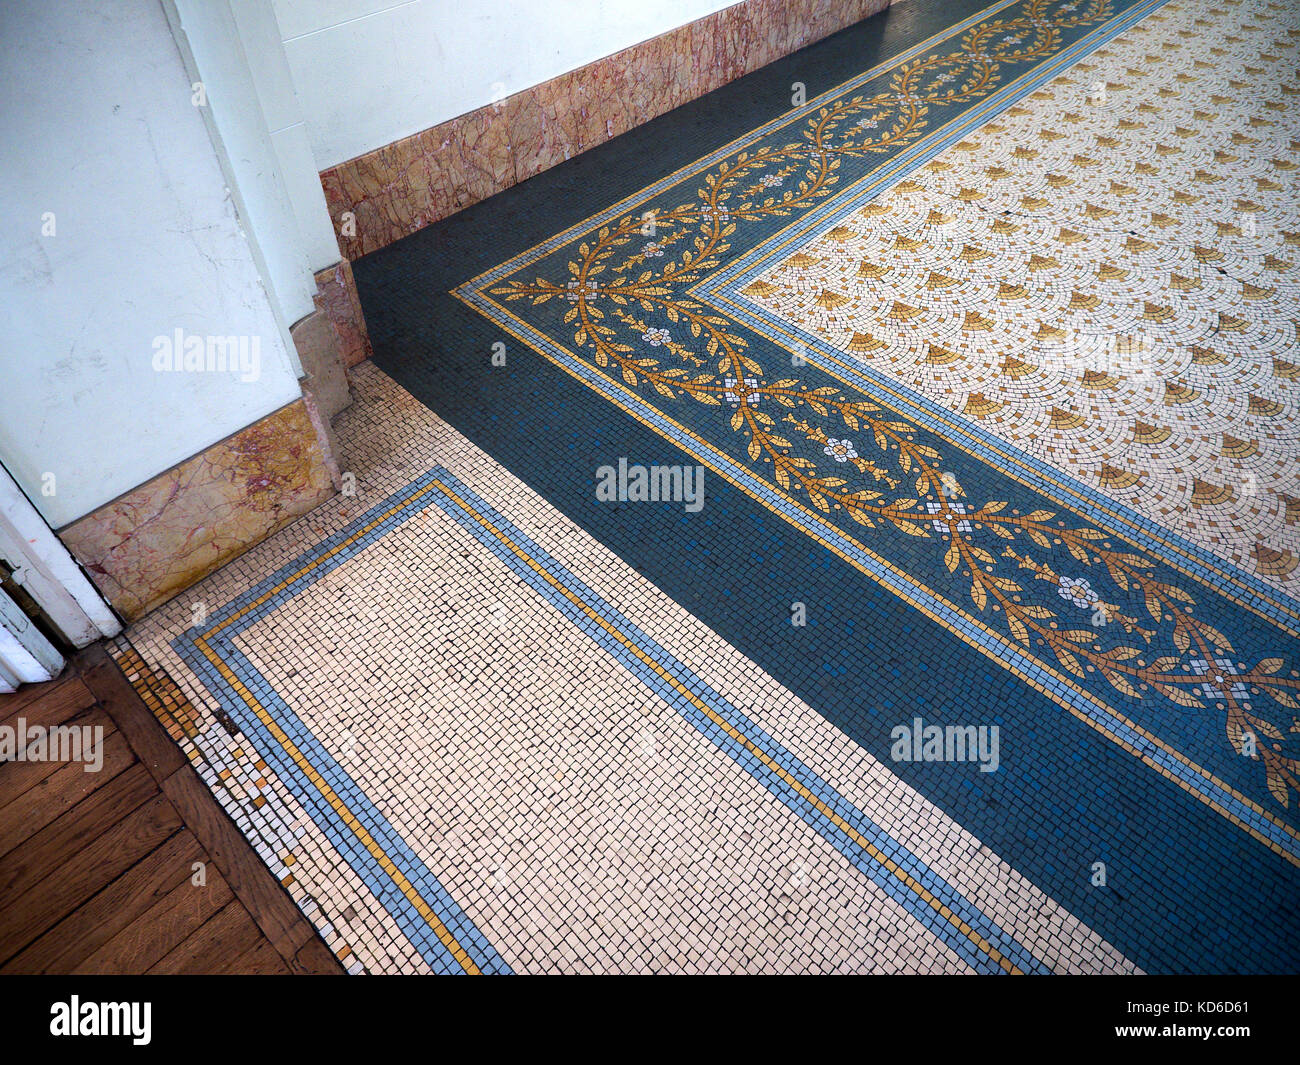 https://c8.alamy.com/comp/KD6D61/cordoba-argentina-2017-details-of-the-hand-made-tile-floor-at-the-KD6D61.jpg